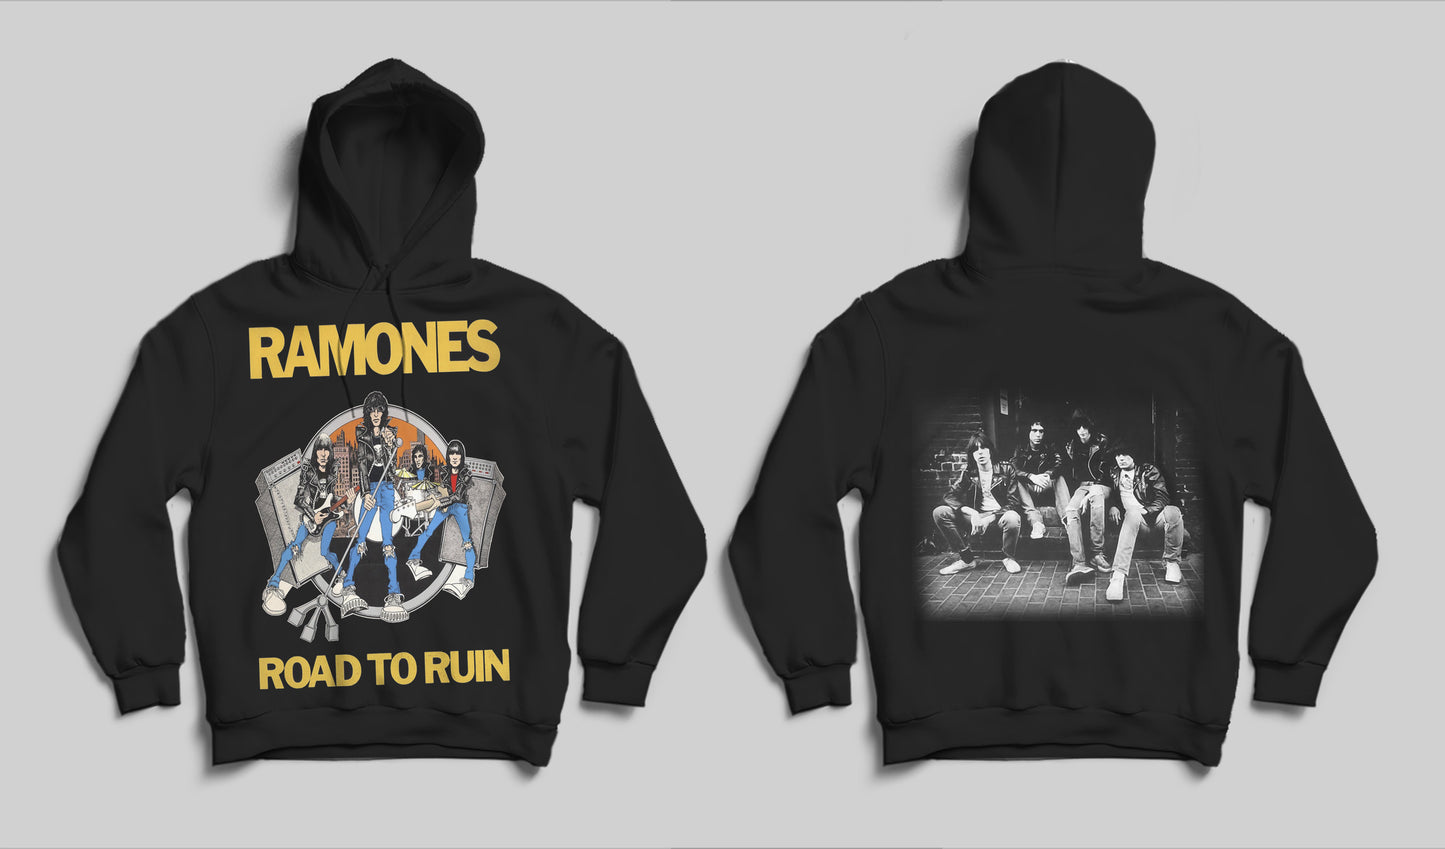 Ramones hoodies